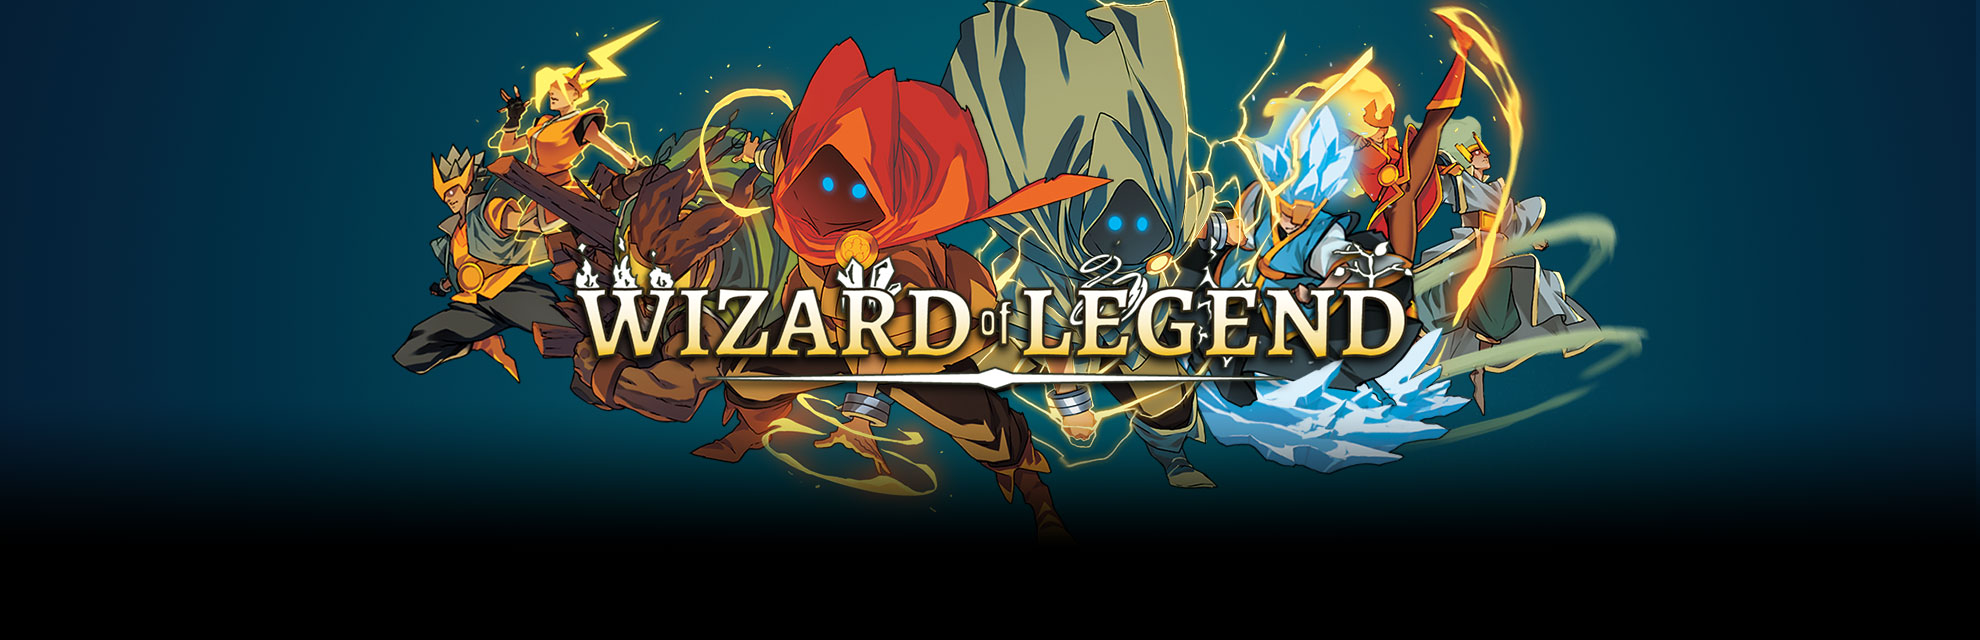 Wizard of Legend 2 - Official Announcement Trailer 